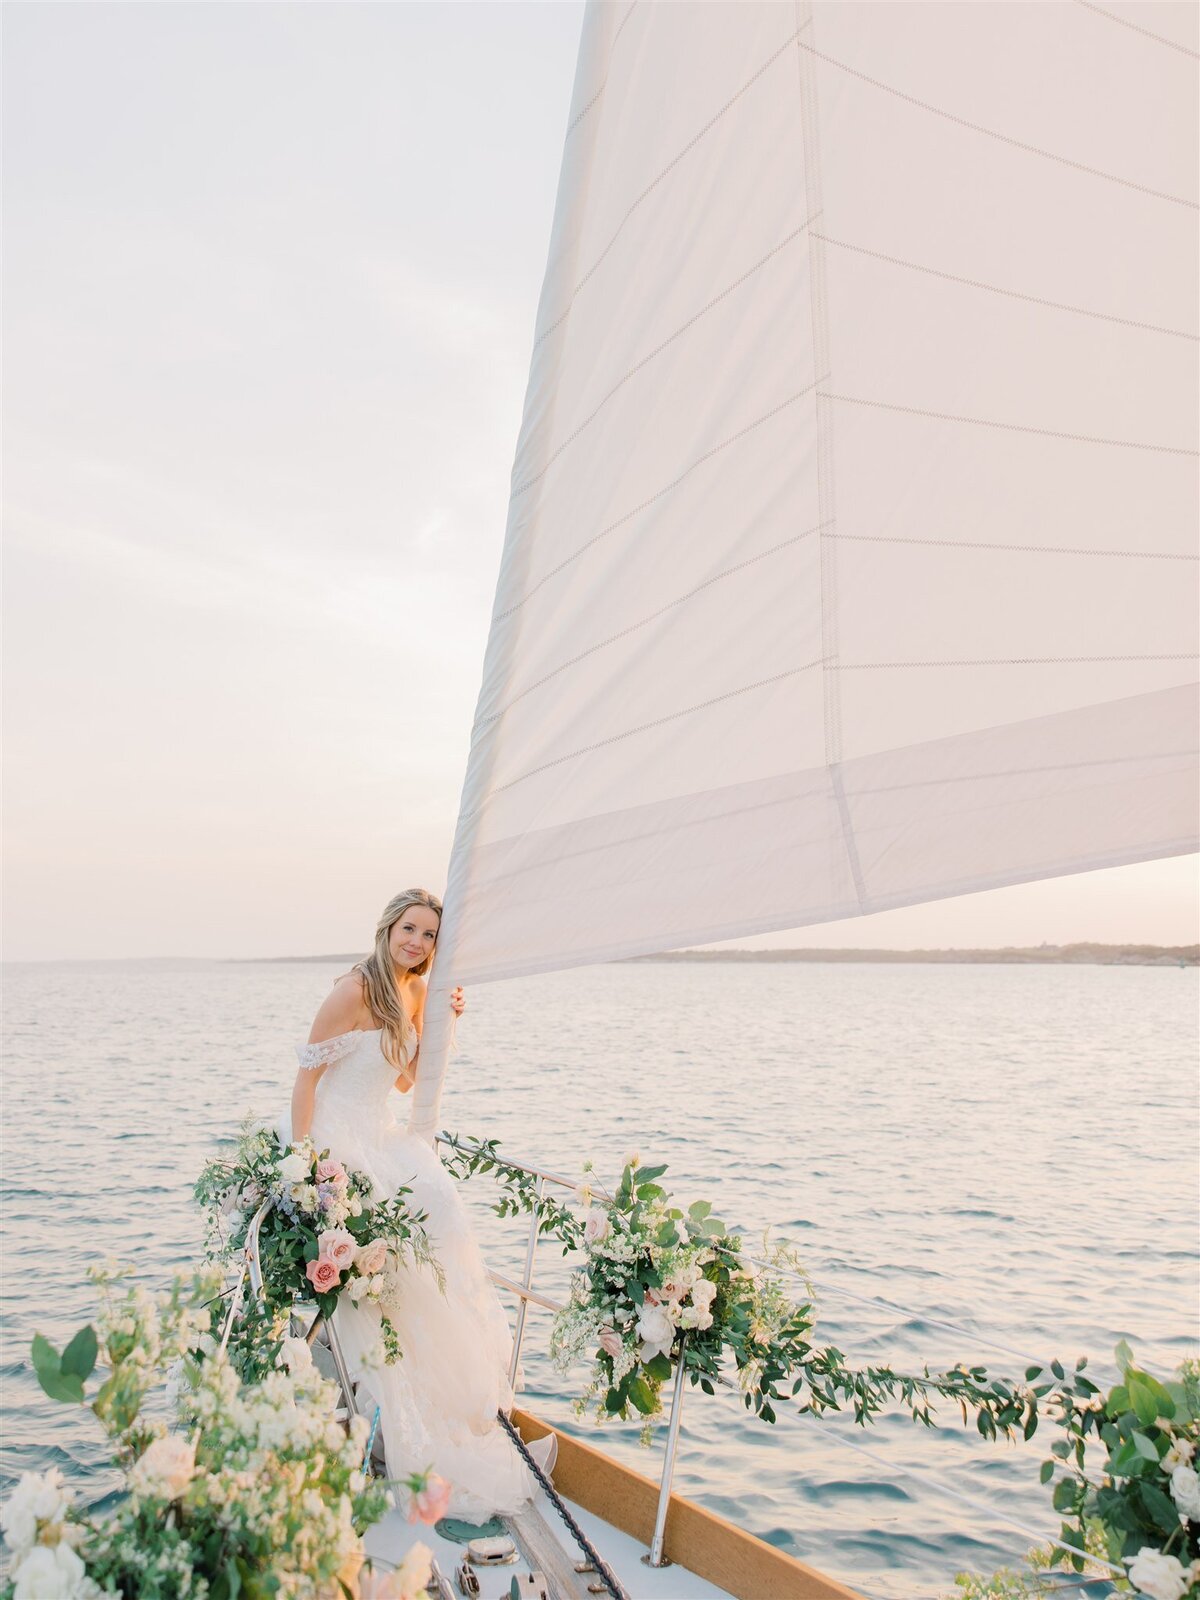 Kate-Murtaugh-Events-RI-wedding-planner-coastal-Newport-bride-sailboat-elopement